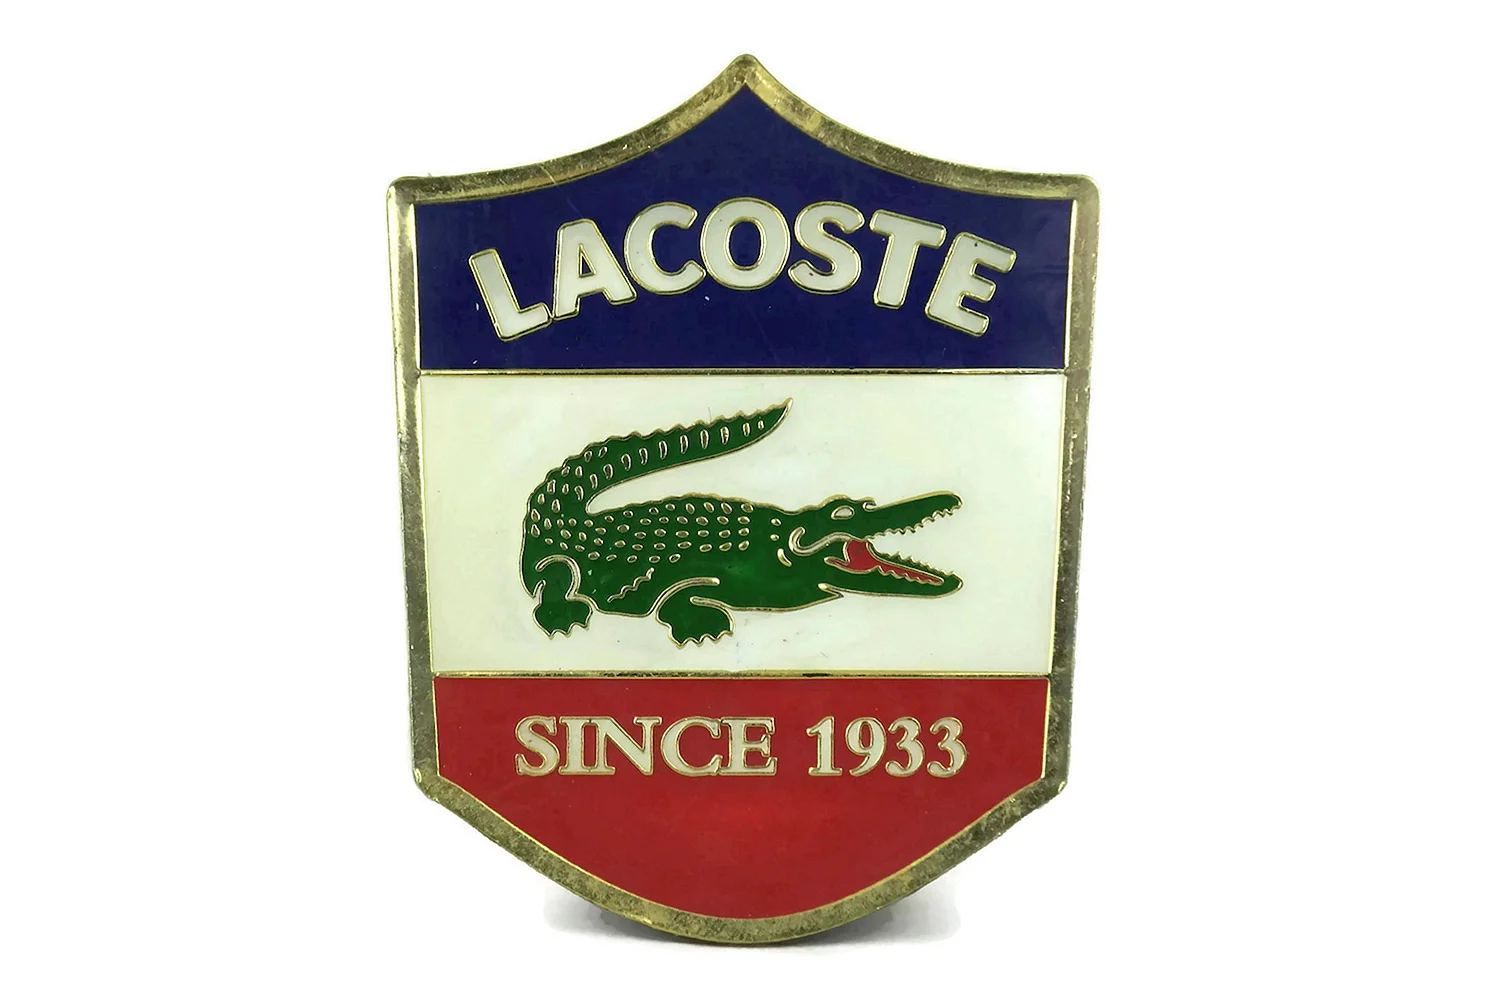 Лакоста since 1933